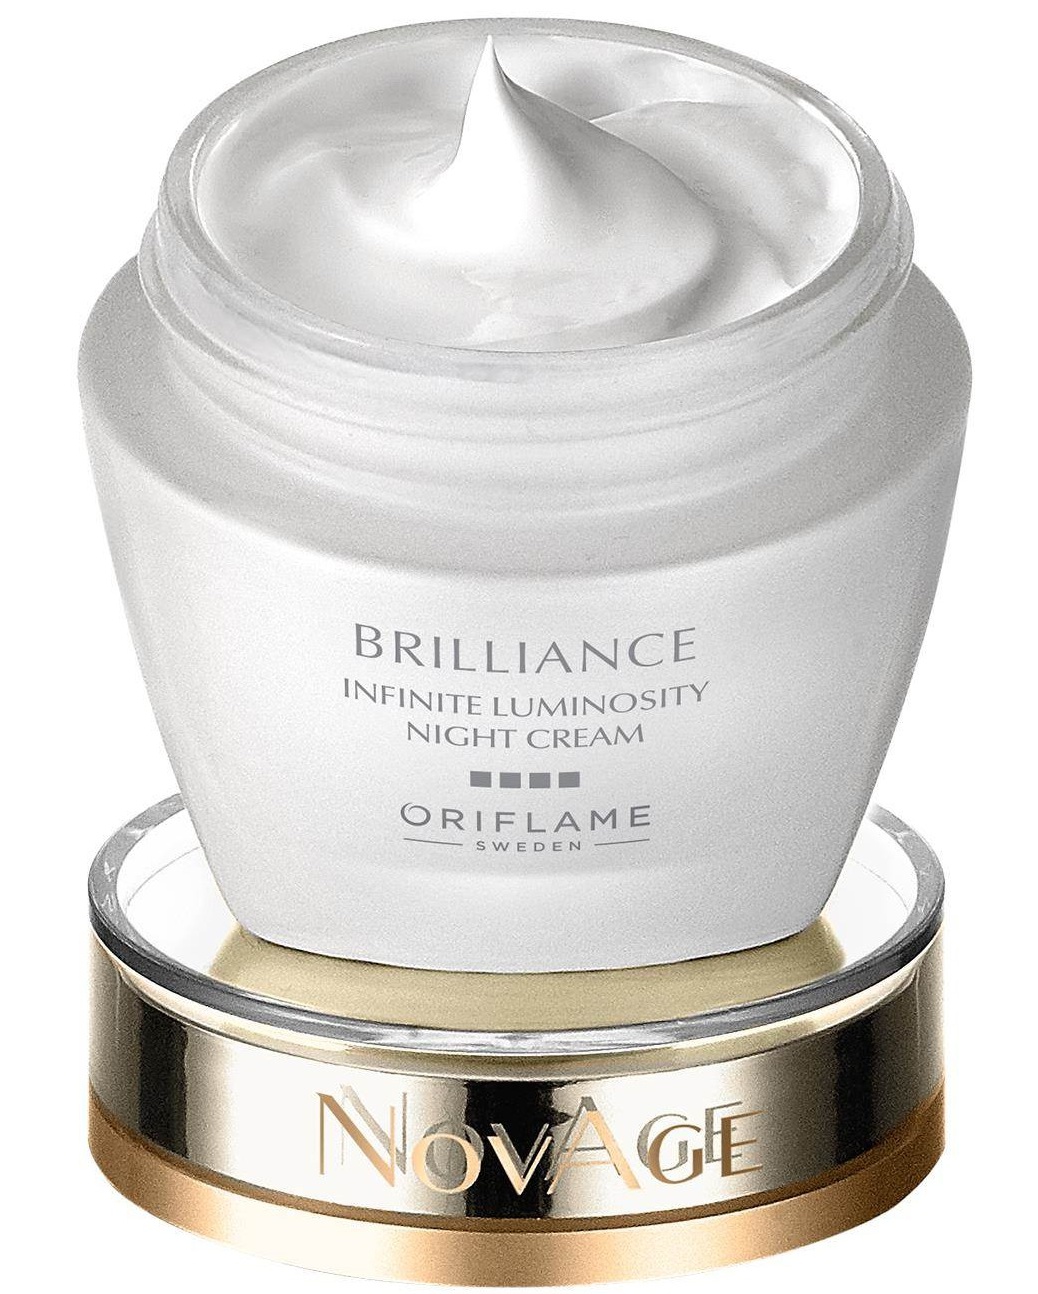 NovAge Brilliance Infinite Luminosity Night Cream